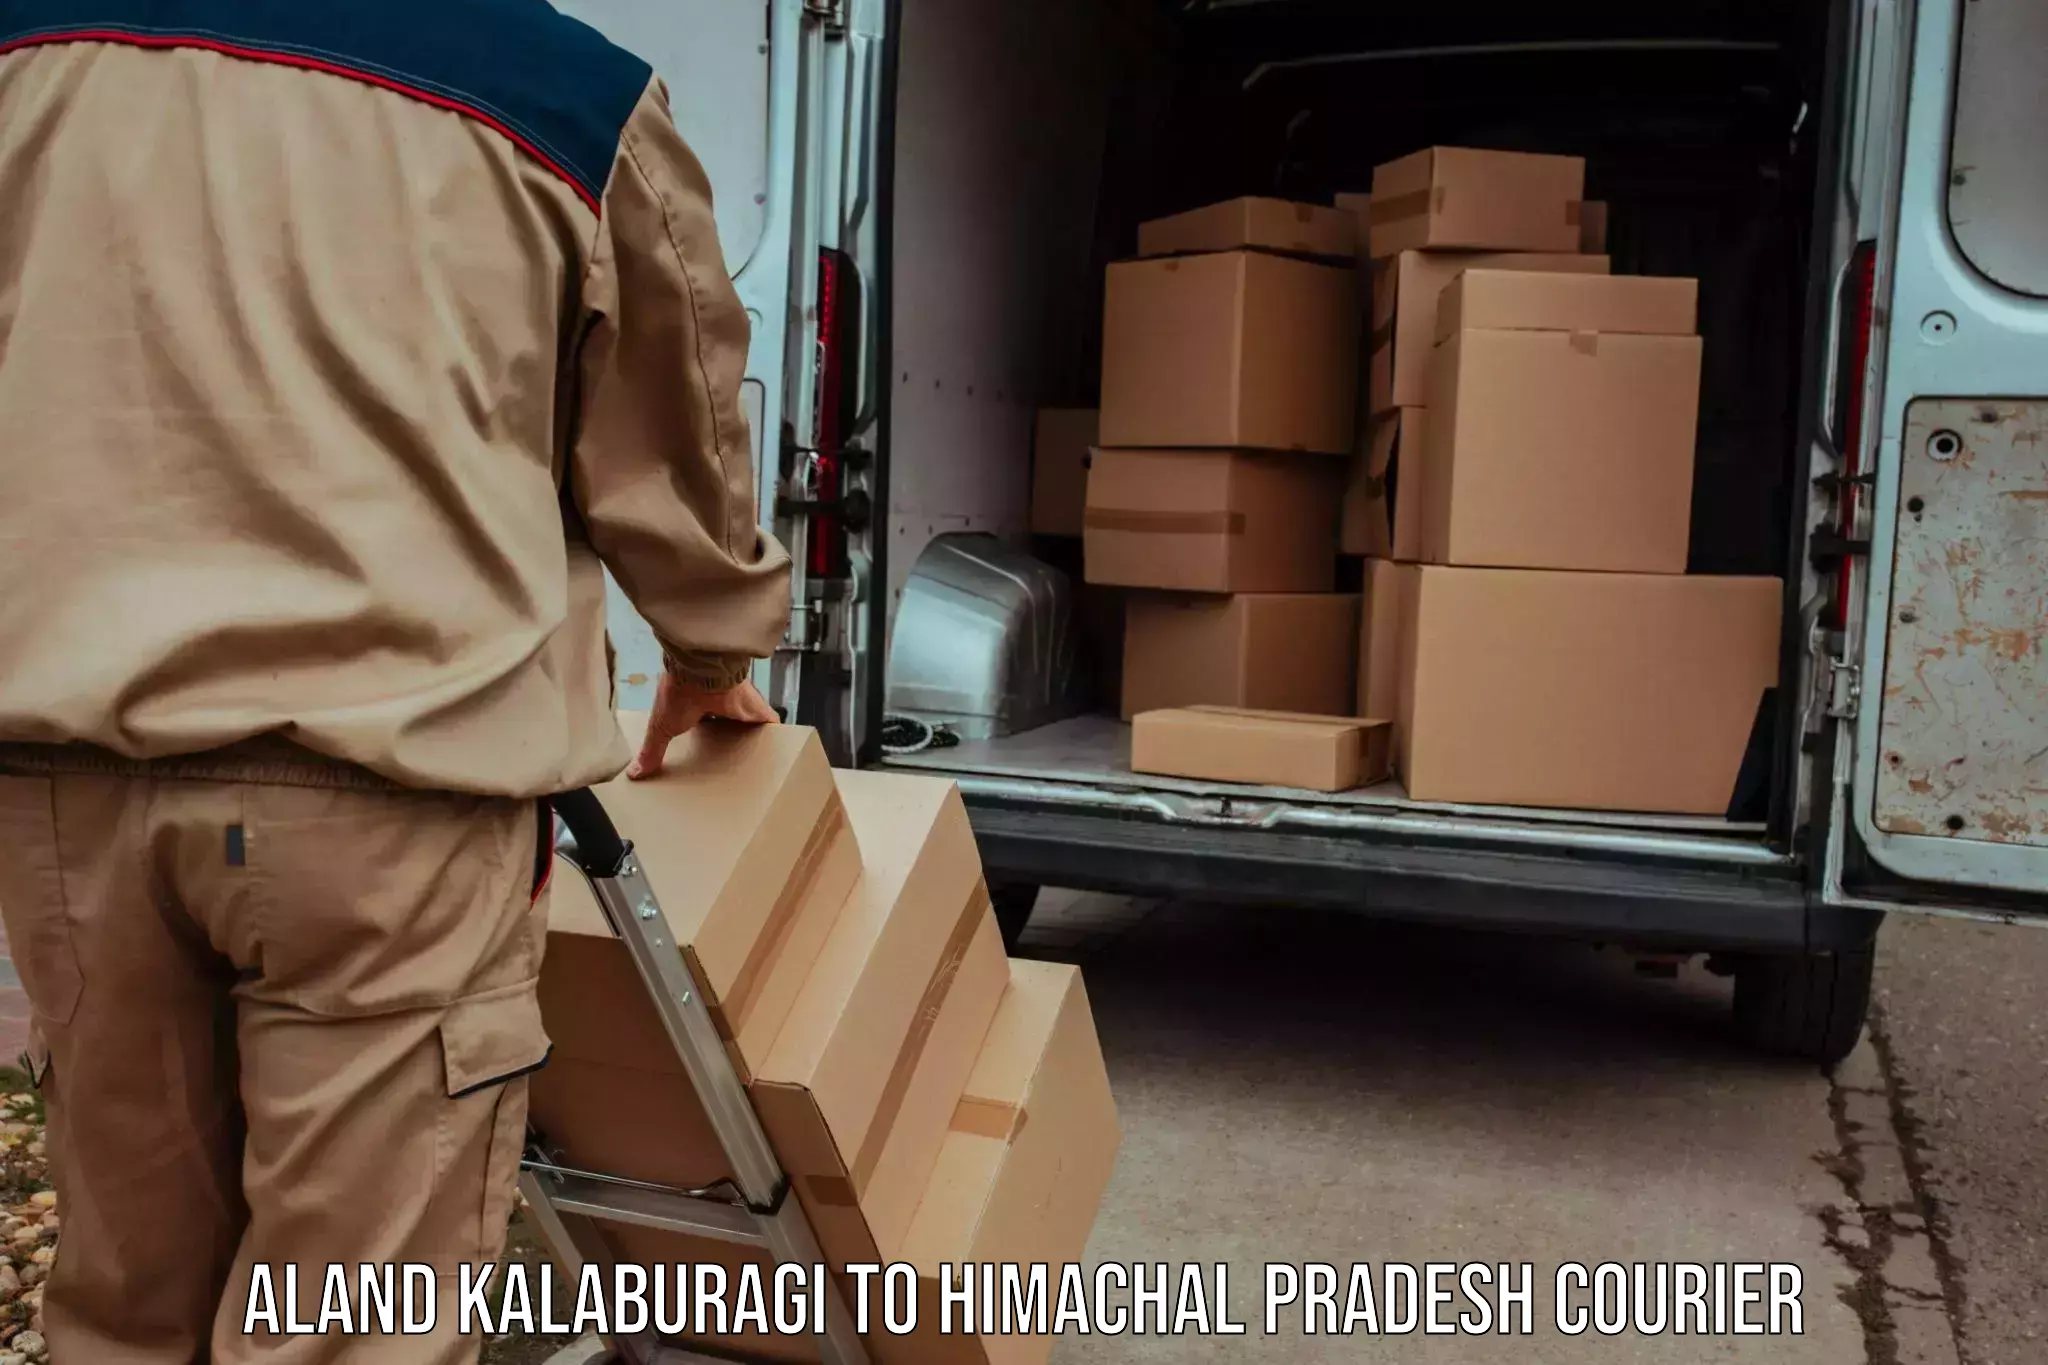 User-friendly delivery service Aland Kalaburagi to Himachal Pradesh